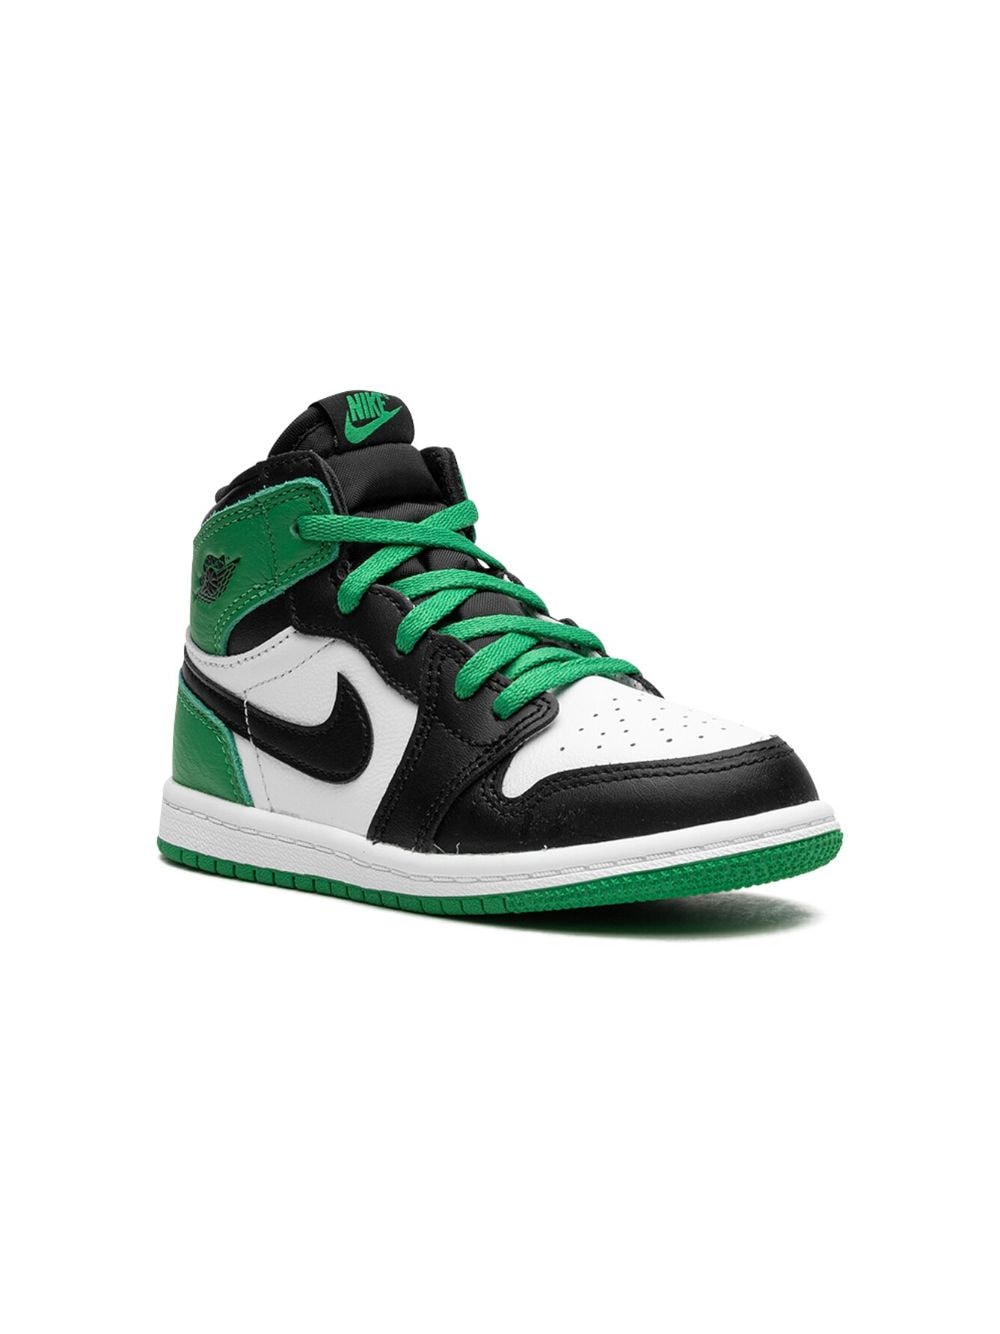 Jordan Kids Air Jordan 1 "Lucky Green" sneakers